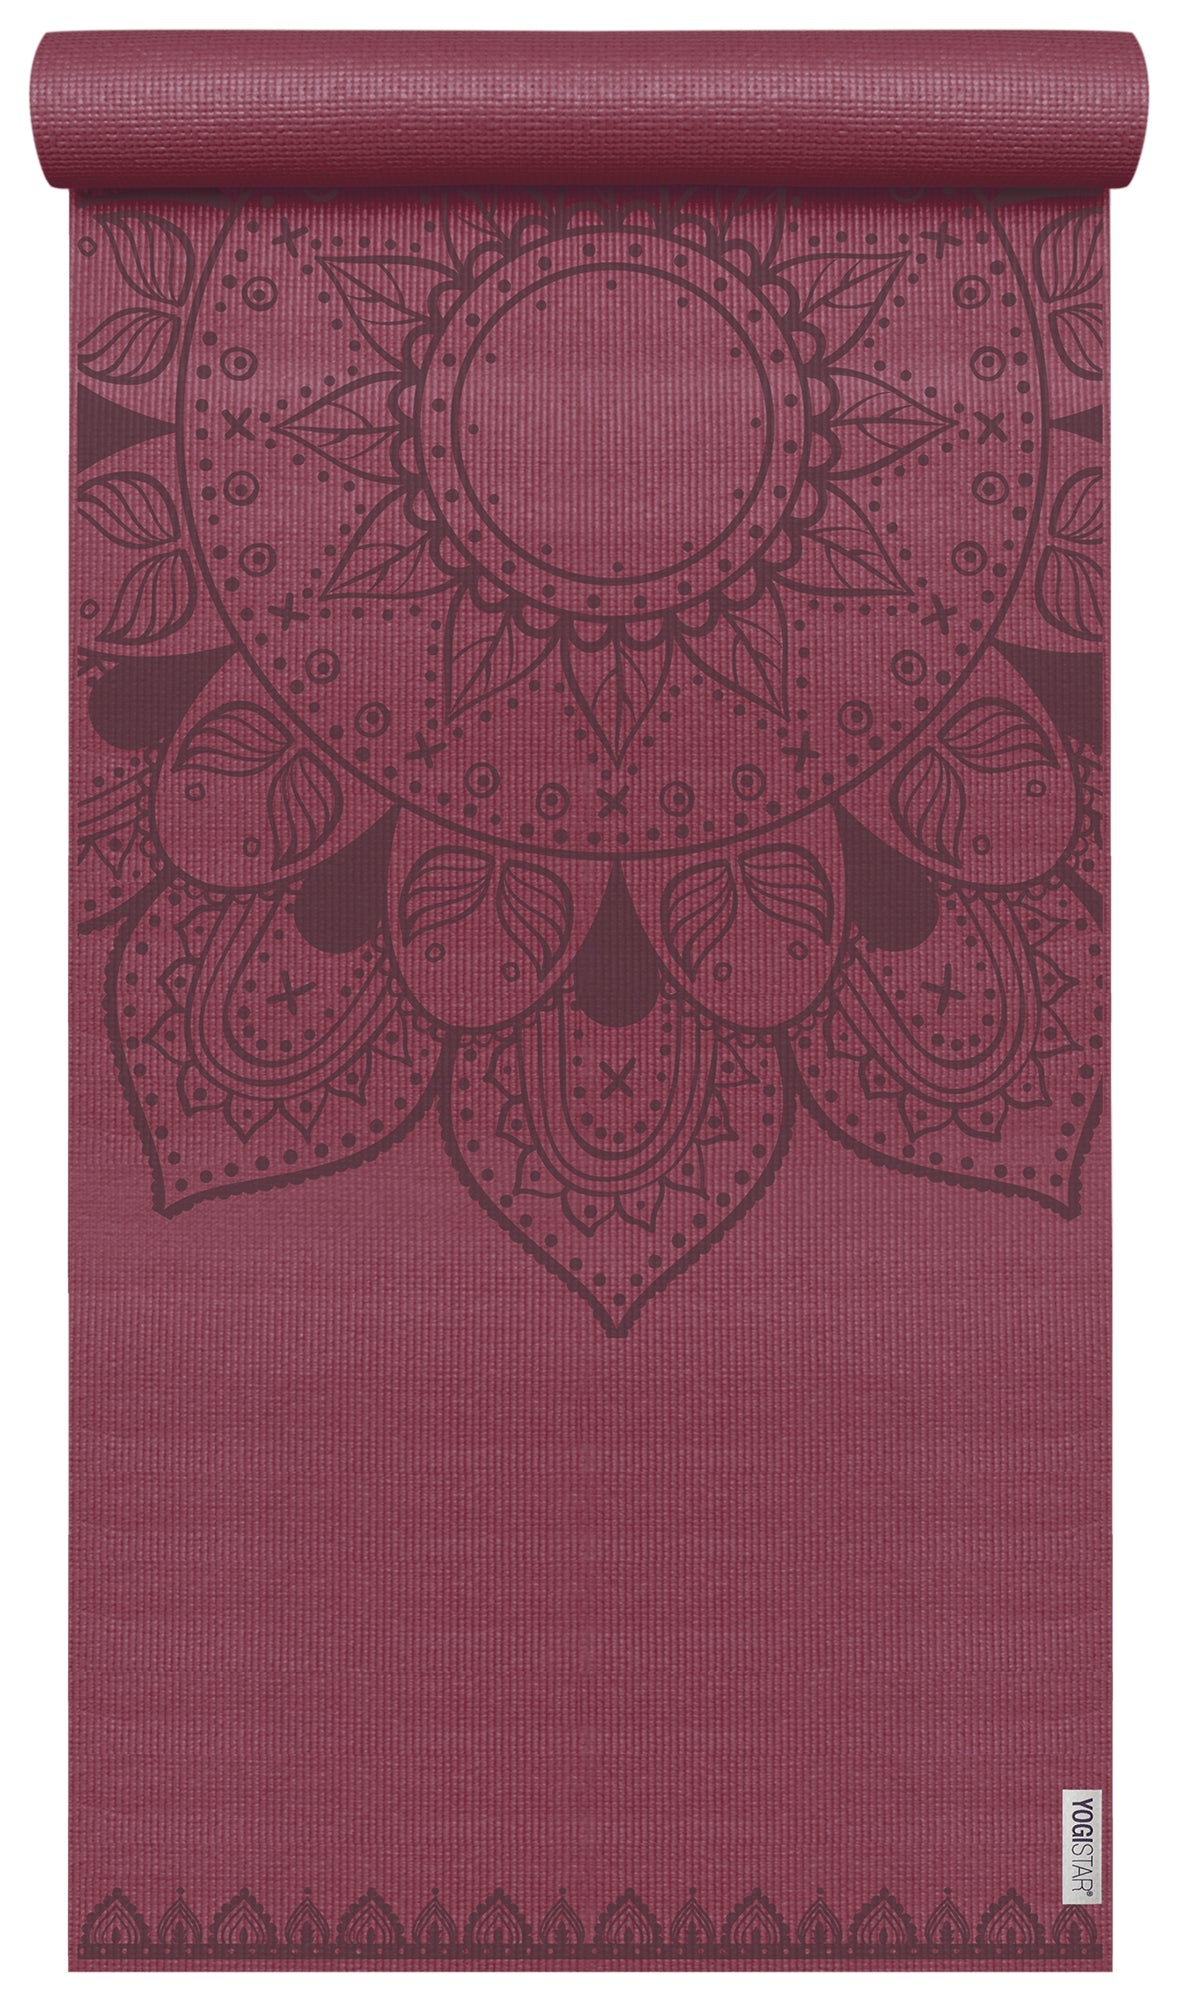 Yogamatte yogimat® basic - art collection - harmonic mandala - bordeaux